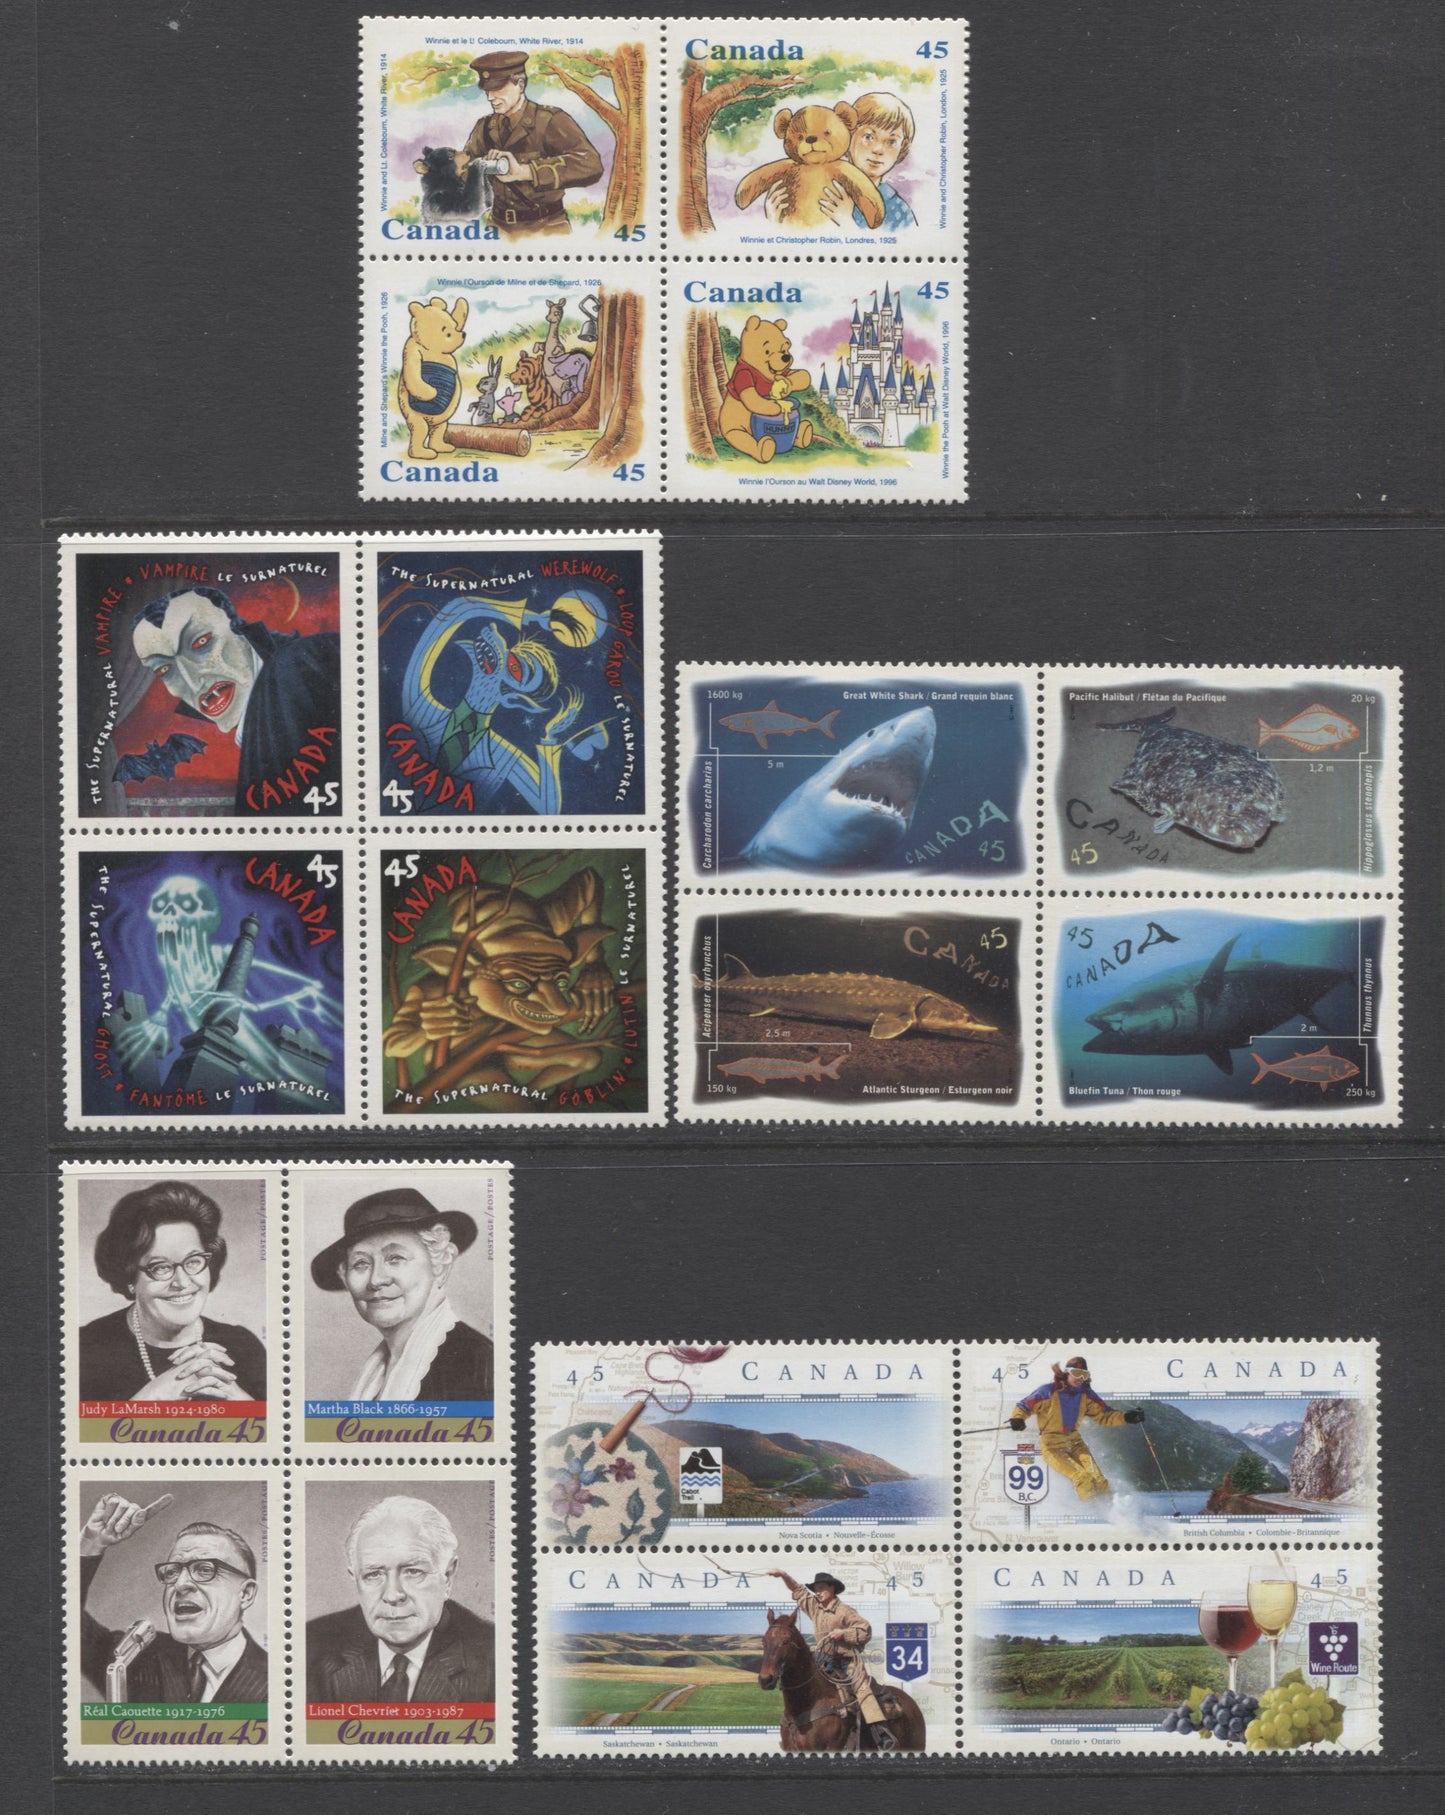 Lot 415 Canada #1621a/1668a 45c Multicolored Winnie With Lt. Colebourn - Goblin, 1996-1997 Commemoratives, 5 VFNH Se-tenant Blocks Of 4